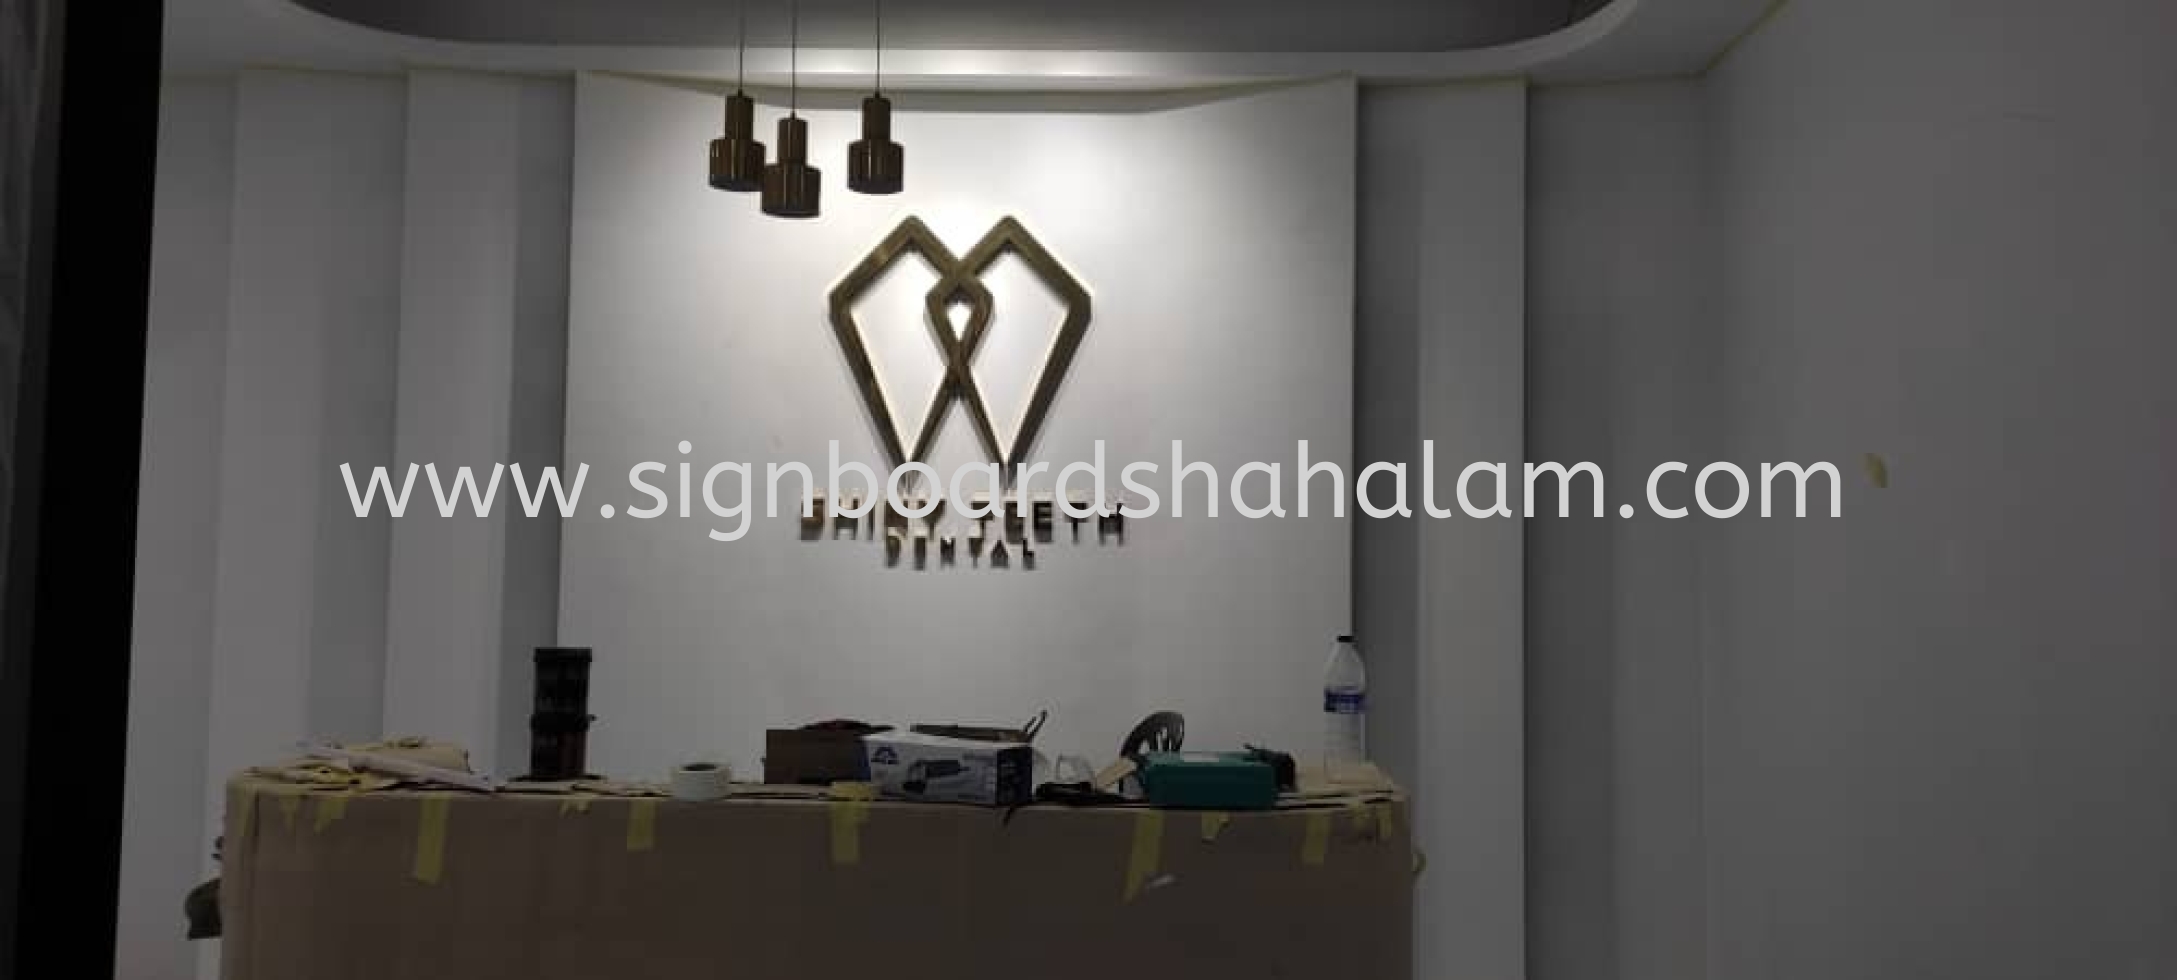 Klinik Pergigian Shiny Teeth Dental 3D Stainless Steel Gold Signage #3DLEDSignboard #Signage #3D Box Up Signage #Stainless Steel Signboard #3DSignboardMaker at Cyberjaya, Kuala Lumpur.